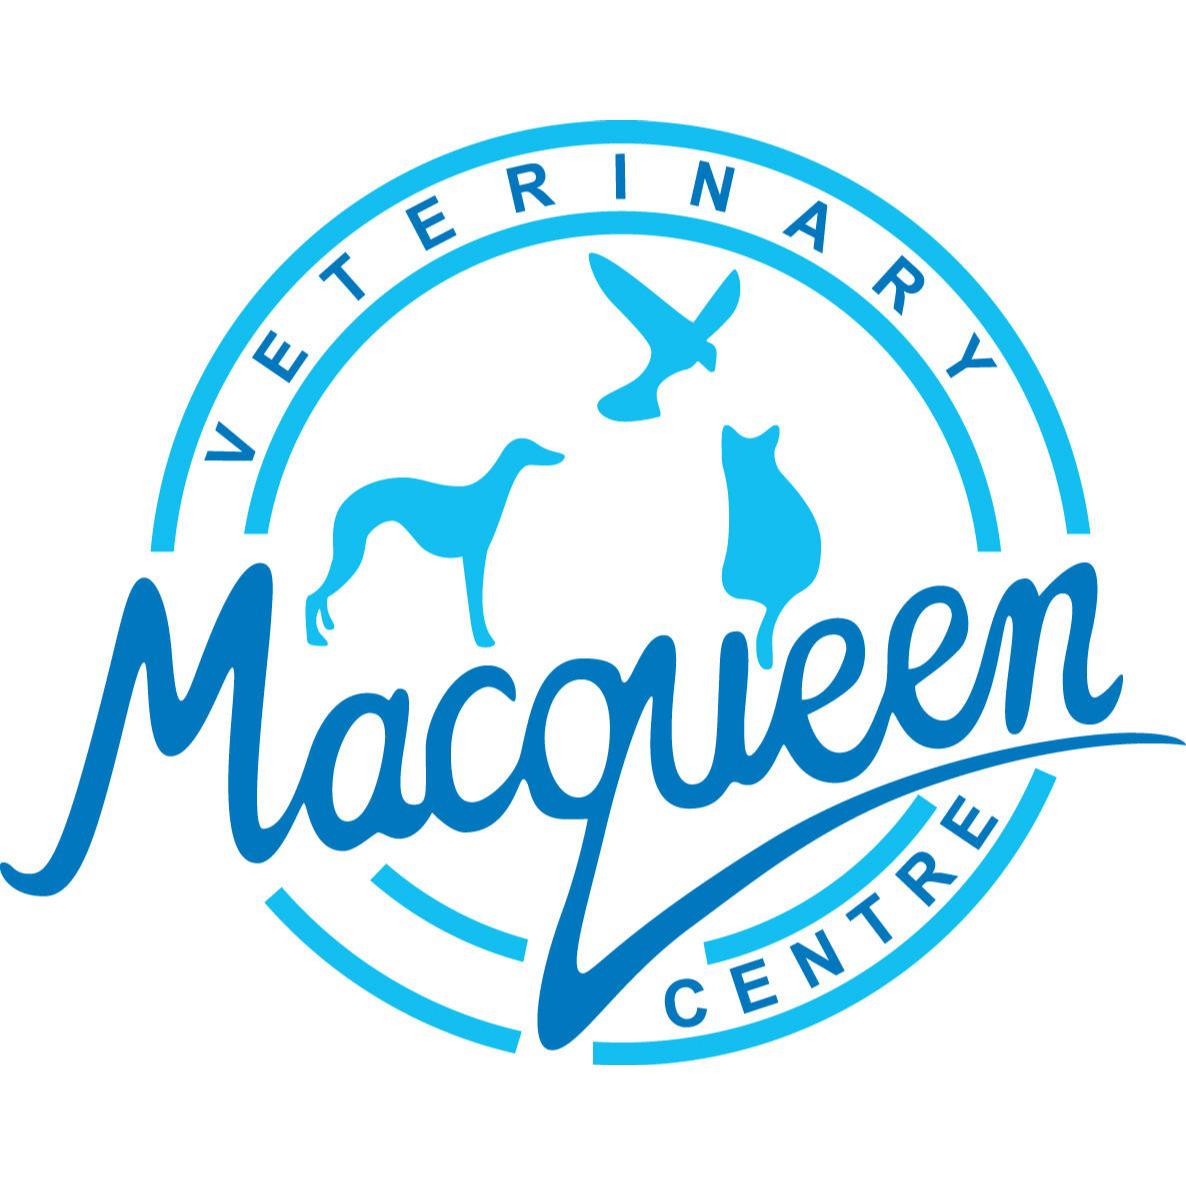 Macqueen Veterinary Centre Devizes 01380 728505